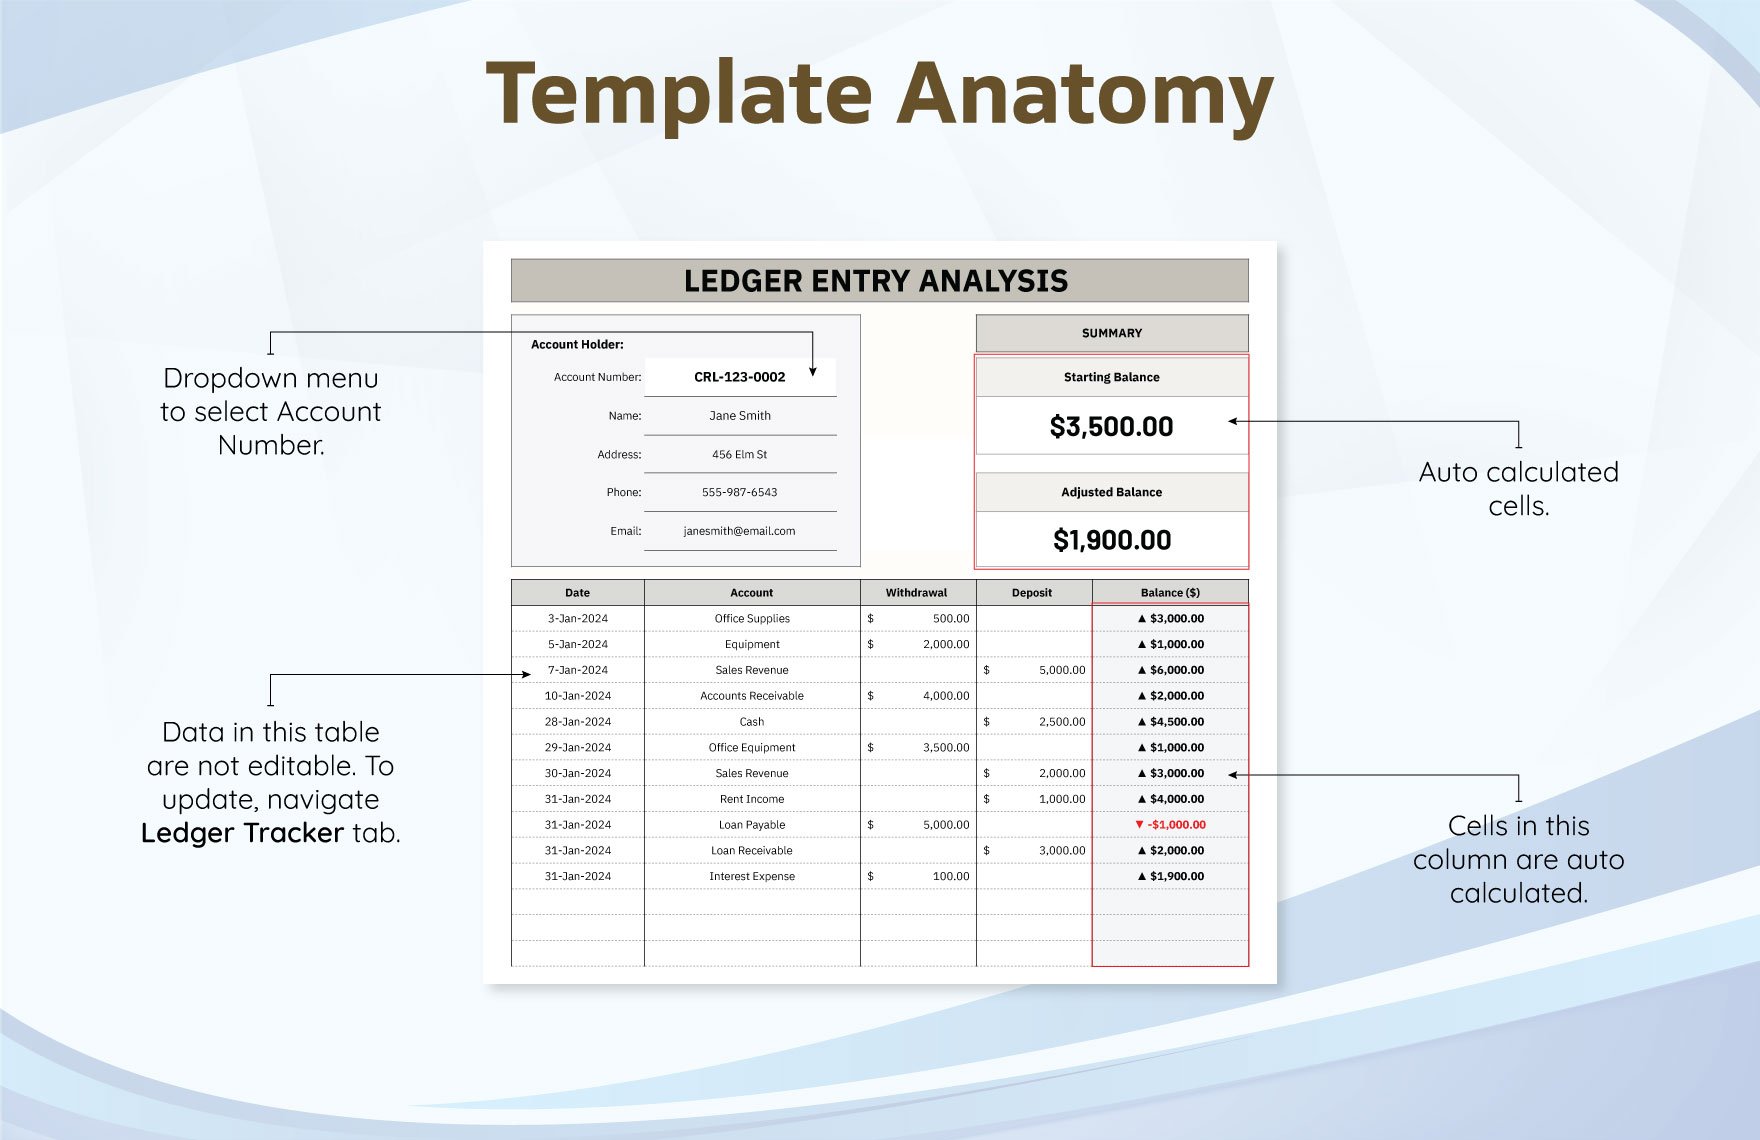 Ledger Entry Analysis Template